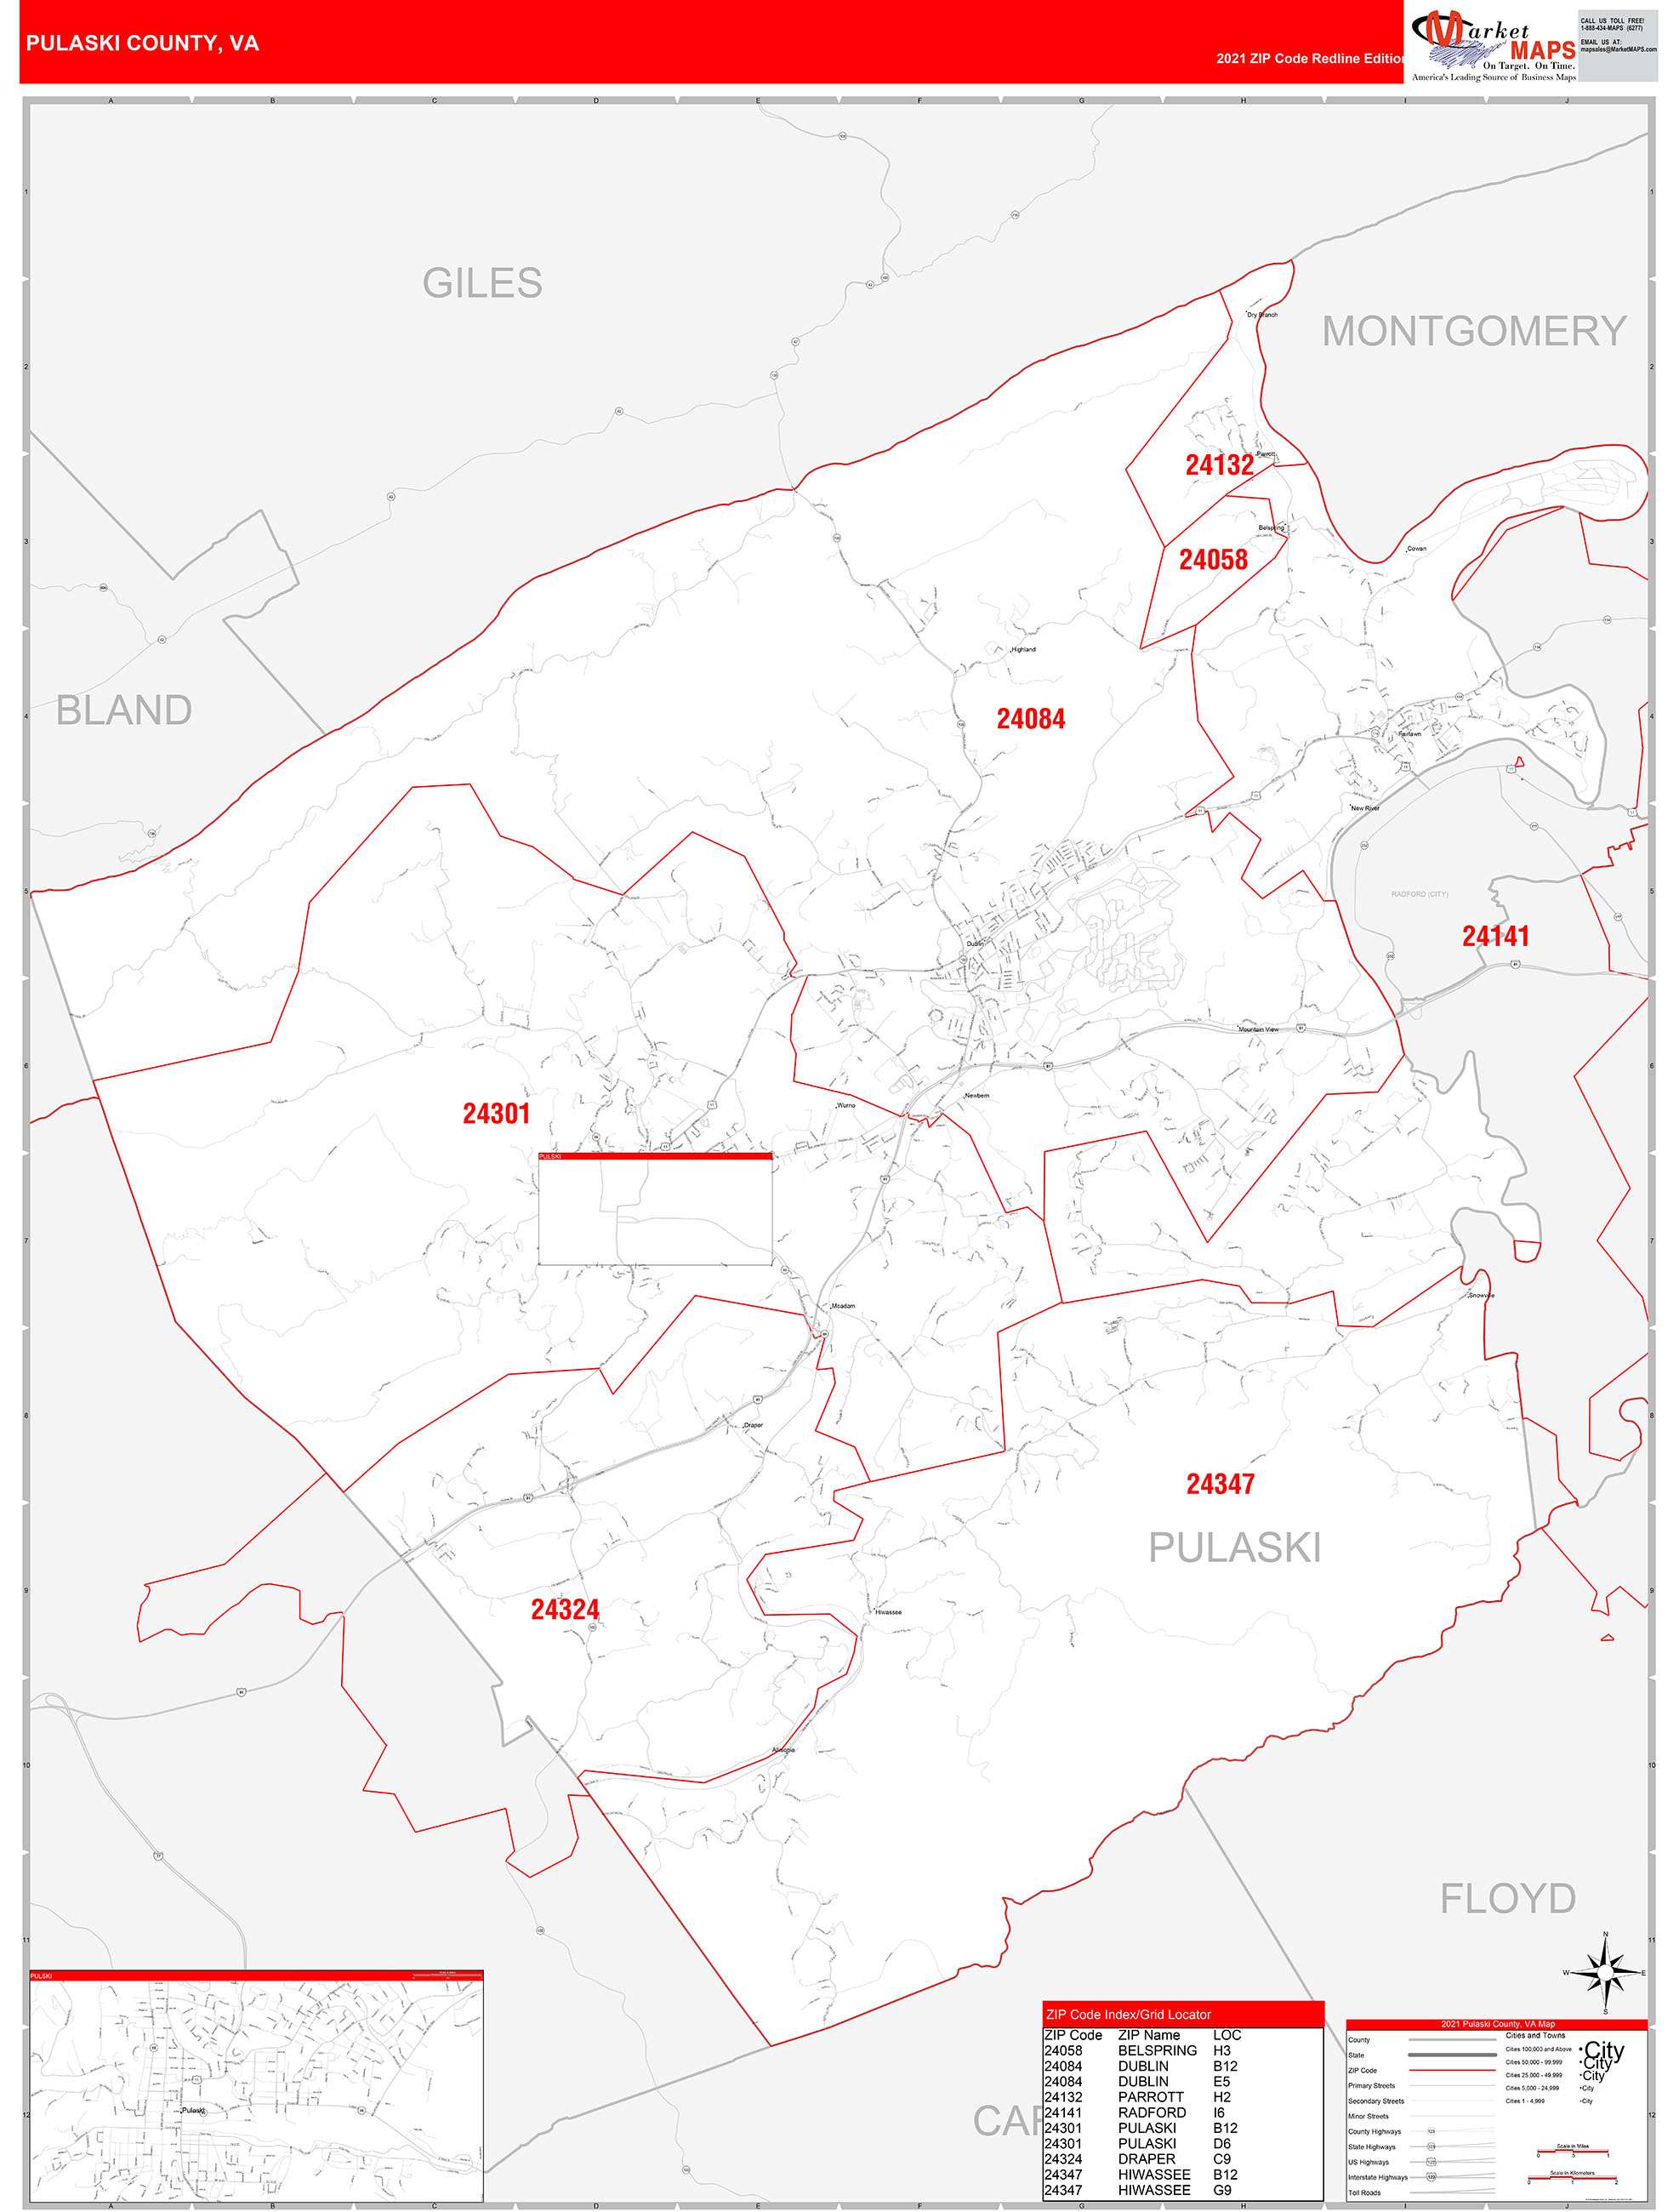 Pulaski County, VA Zip Code Wall Map Red Line Style by MarketMAPS